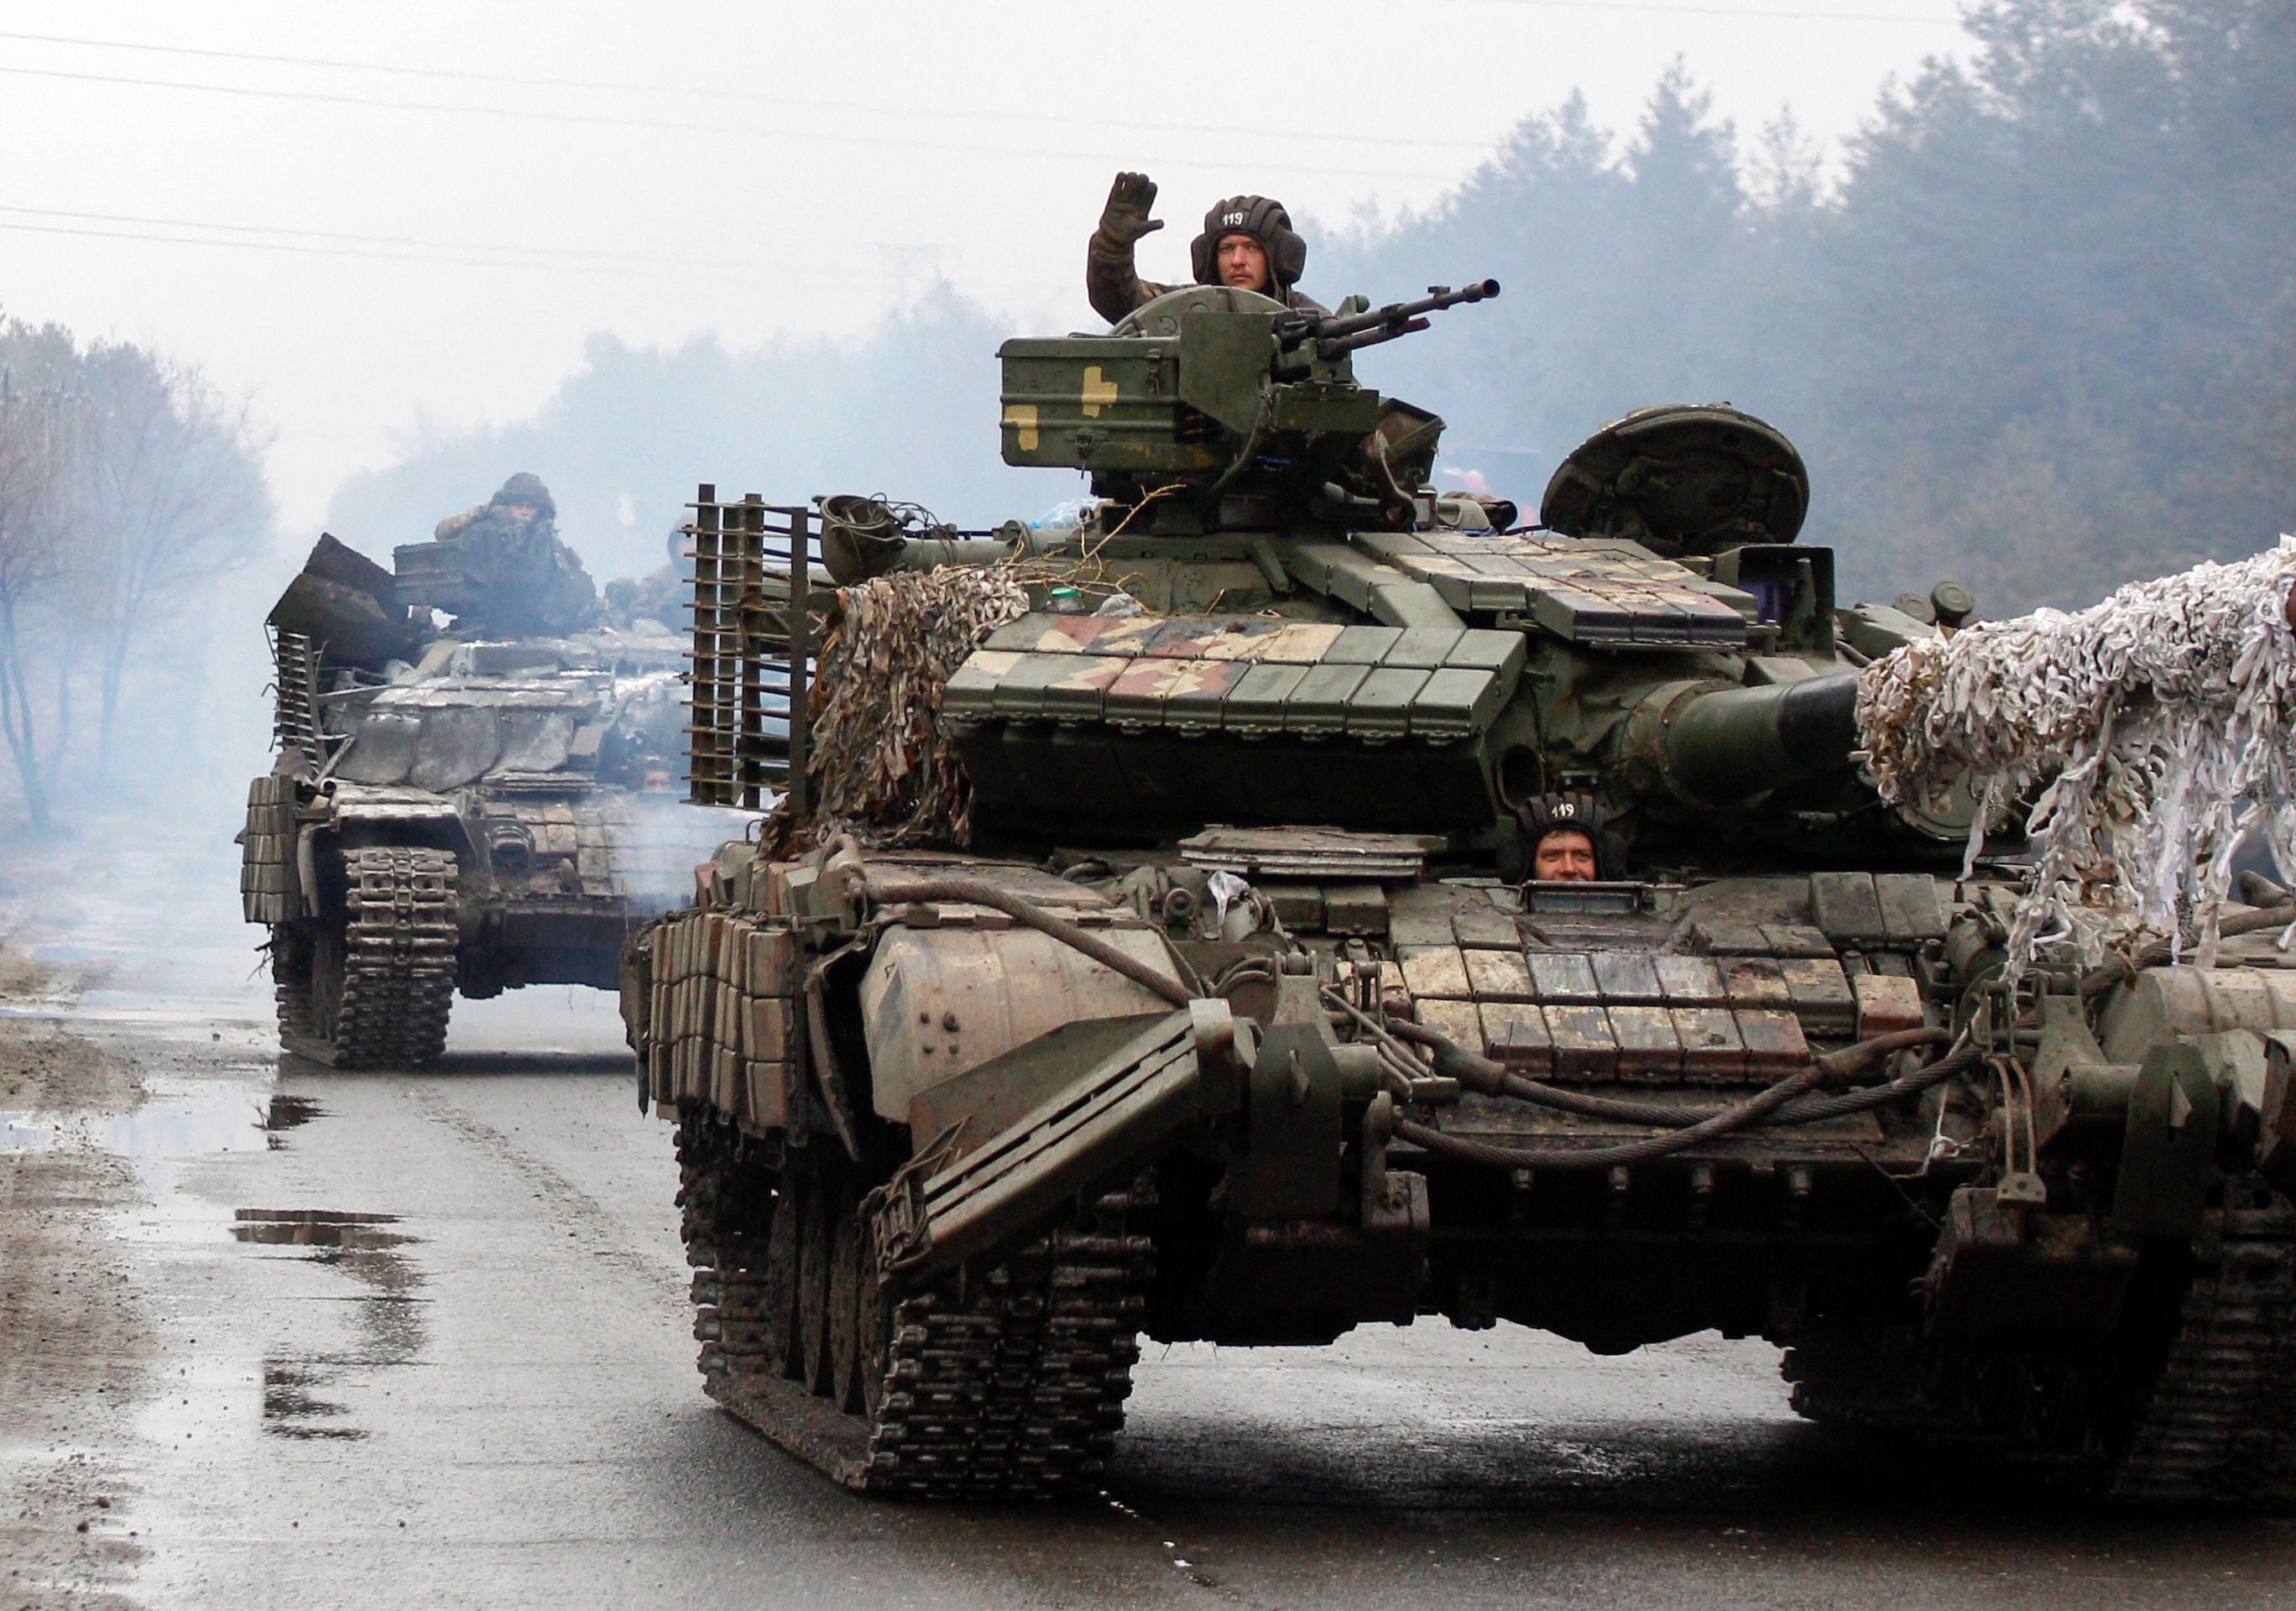 Ukraine Invasion: Live updates on Russian attacks, world response